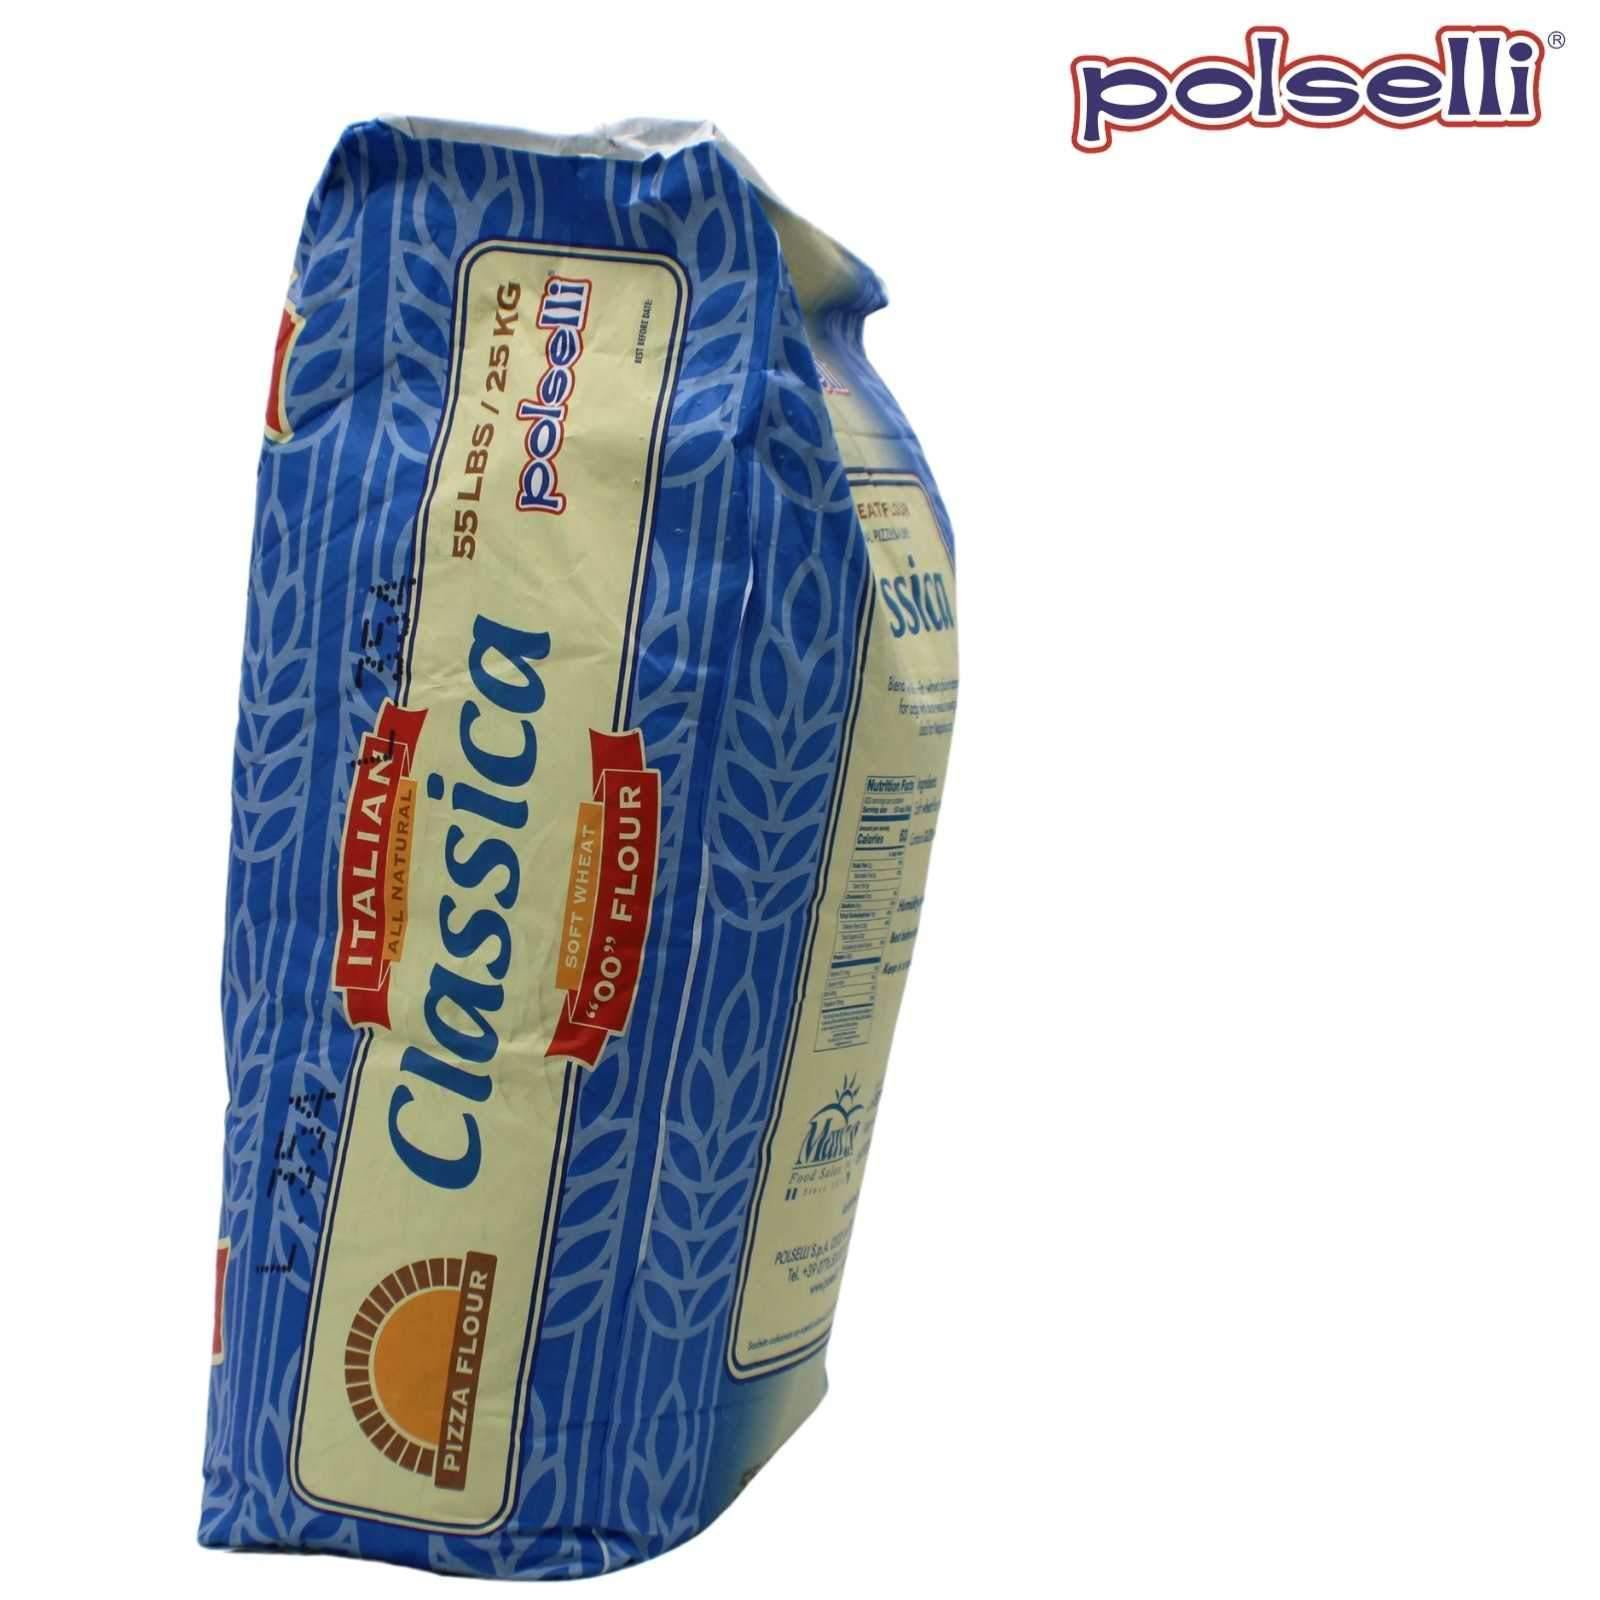 Classica Pizzeria Flour Tipo 00 W260/270